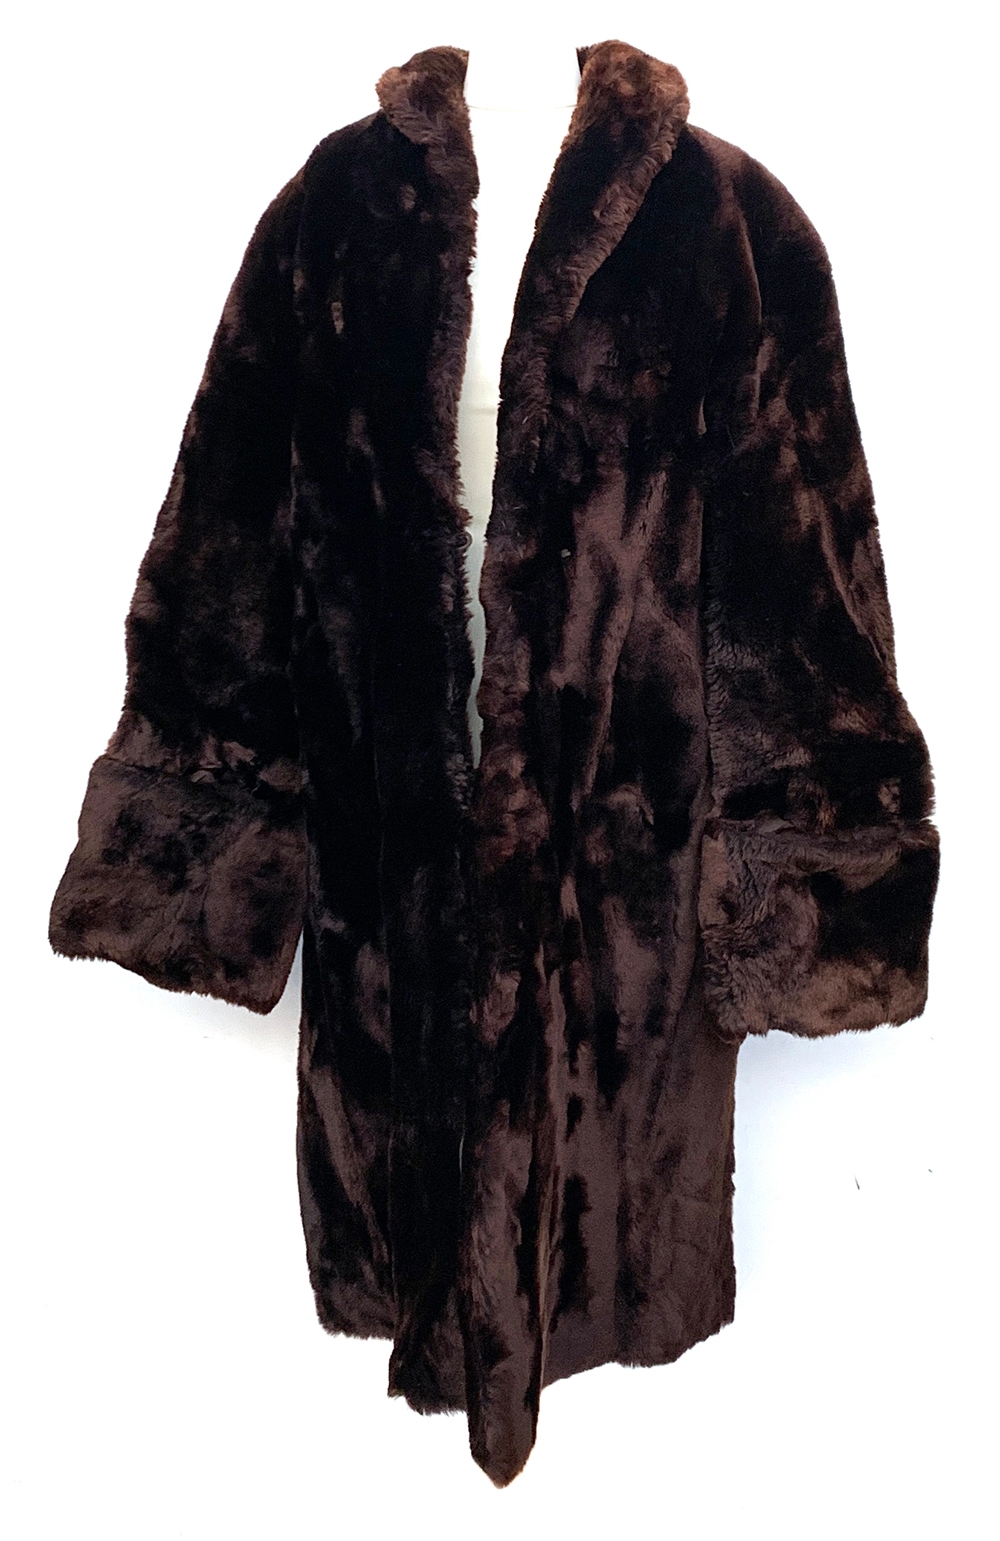 A Marcus of London fur coat